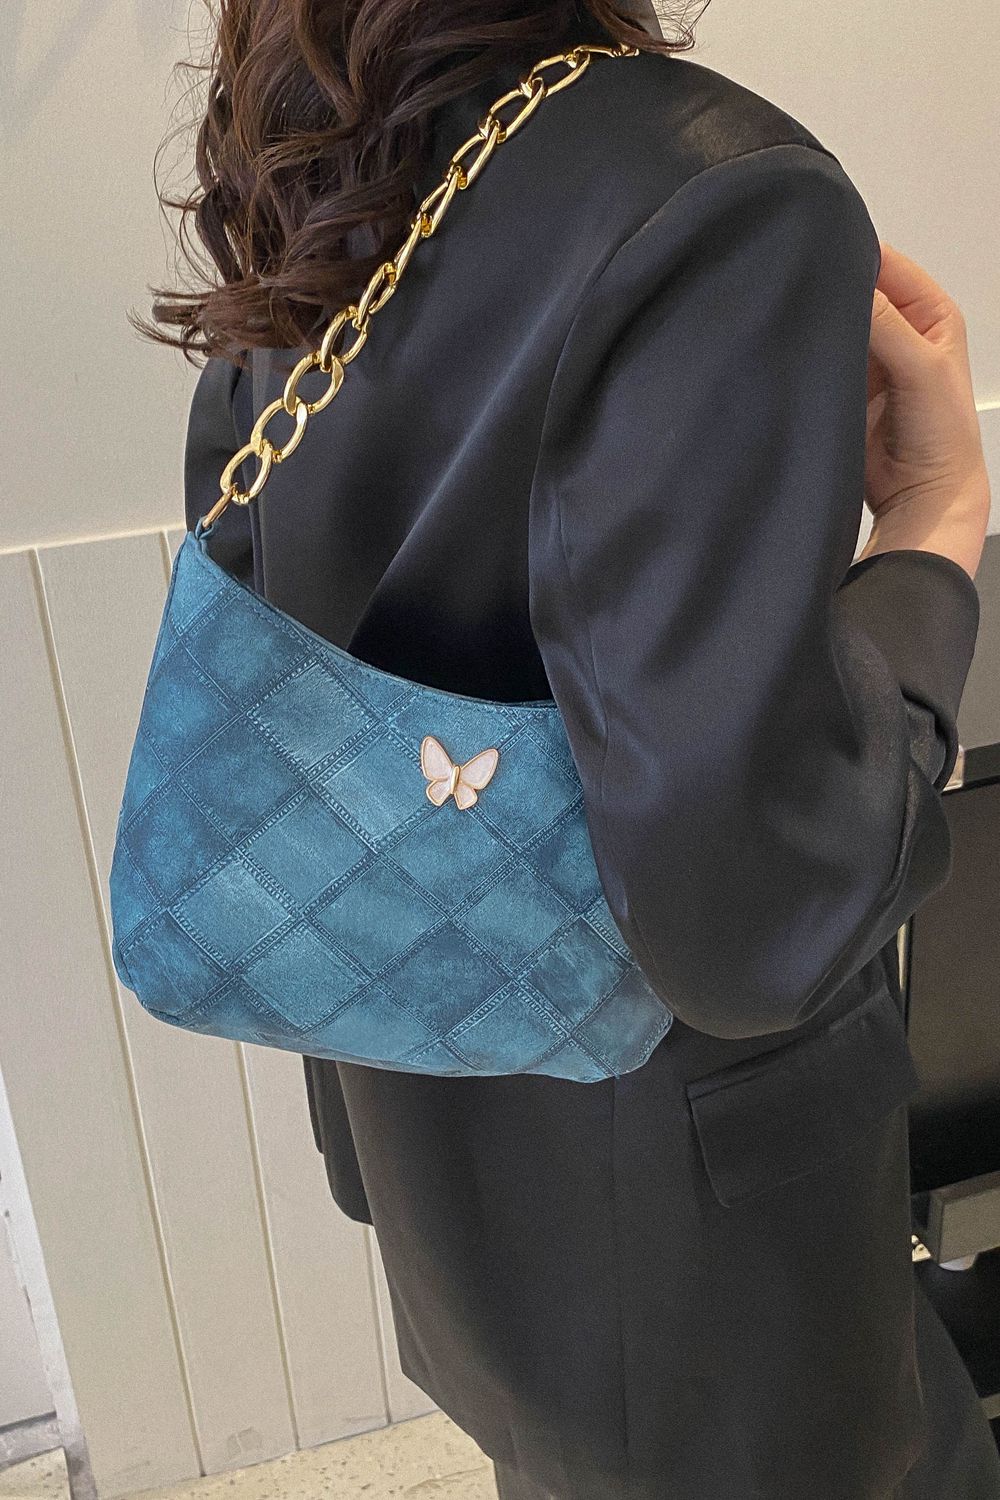 Butterfly Decor PU Leather Shoulder Bag